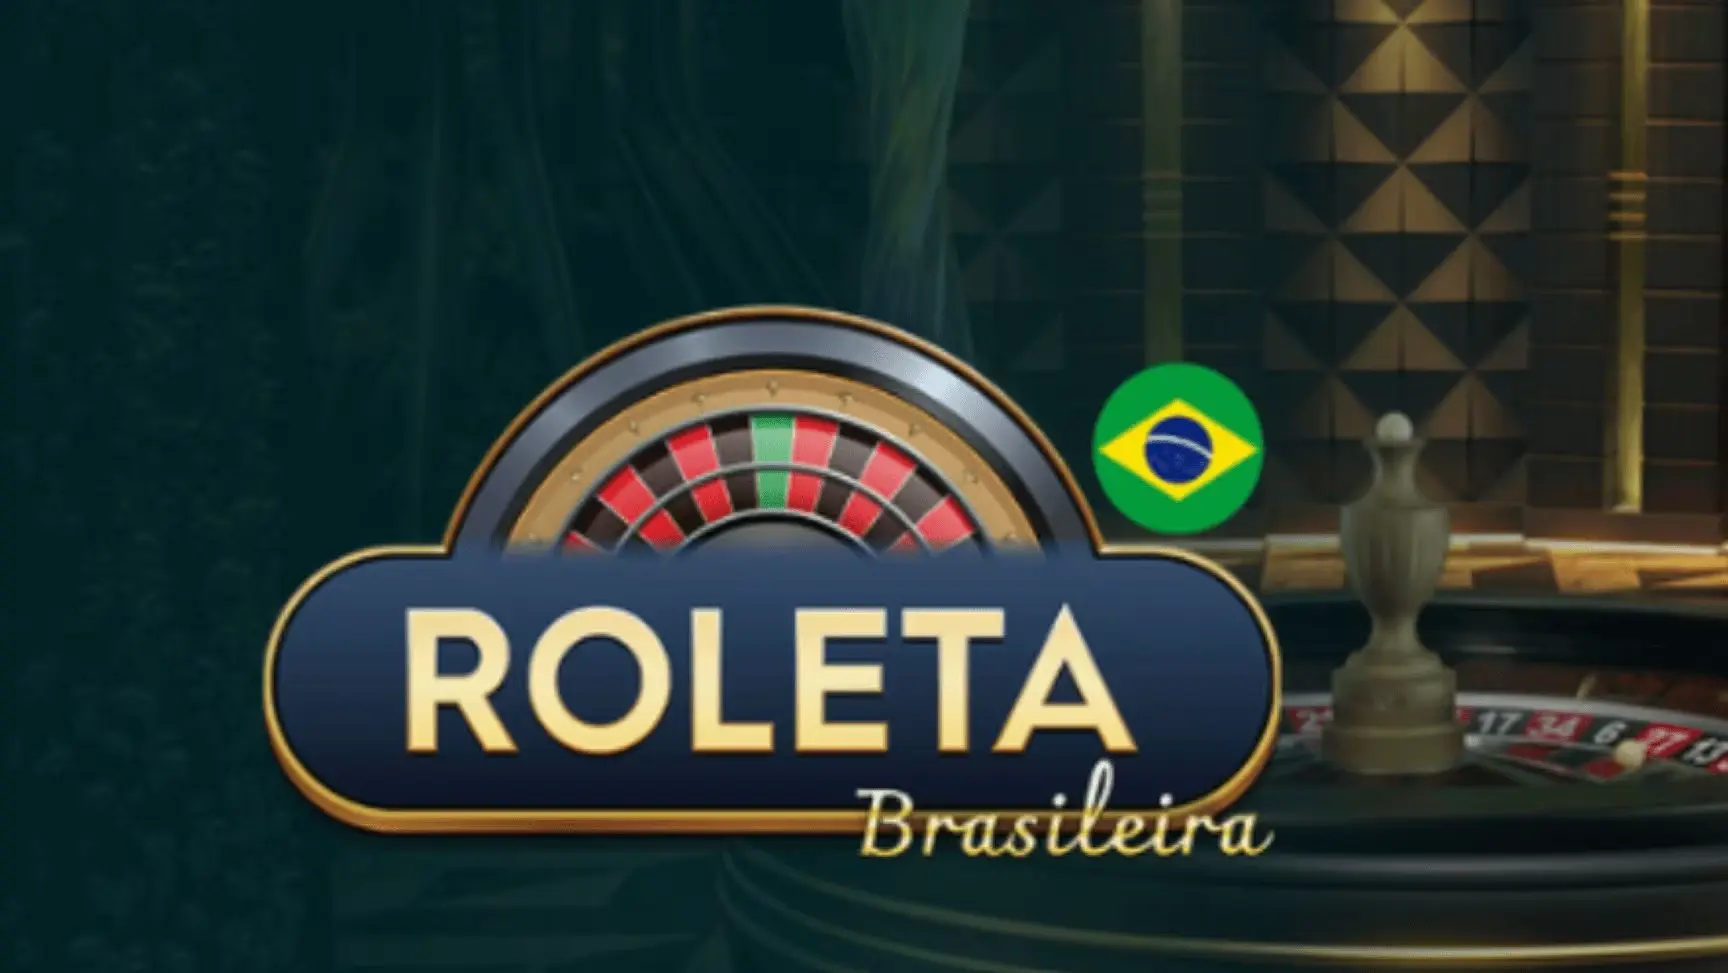 destaques-lancamento-roleta-brasileira-pragmatic-play-news